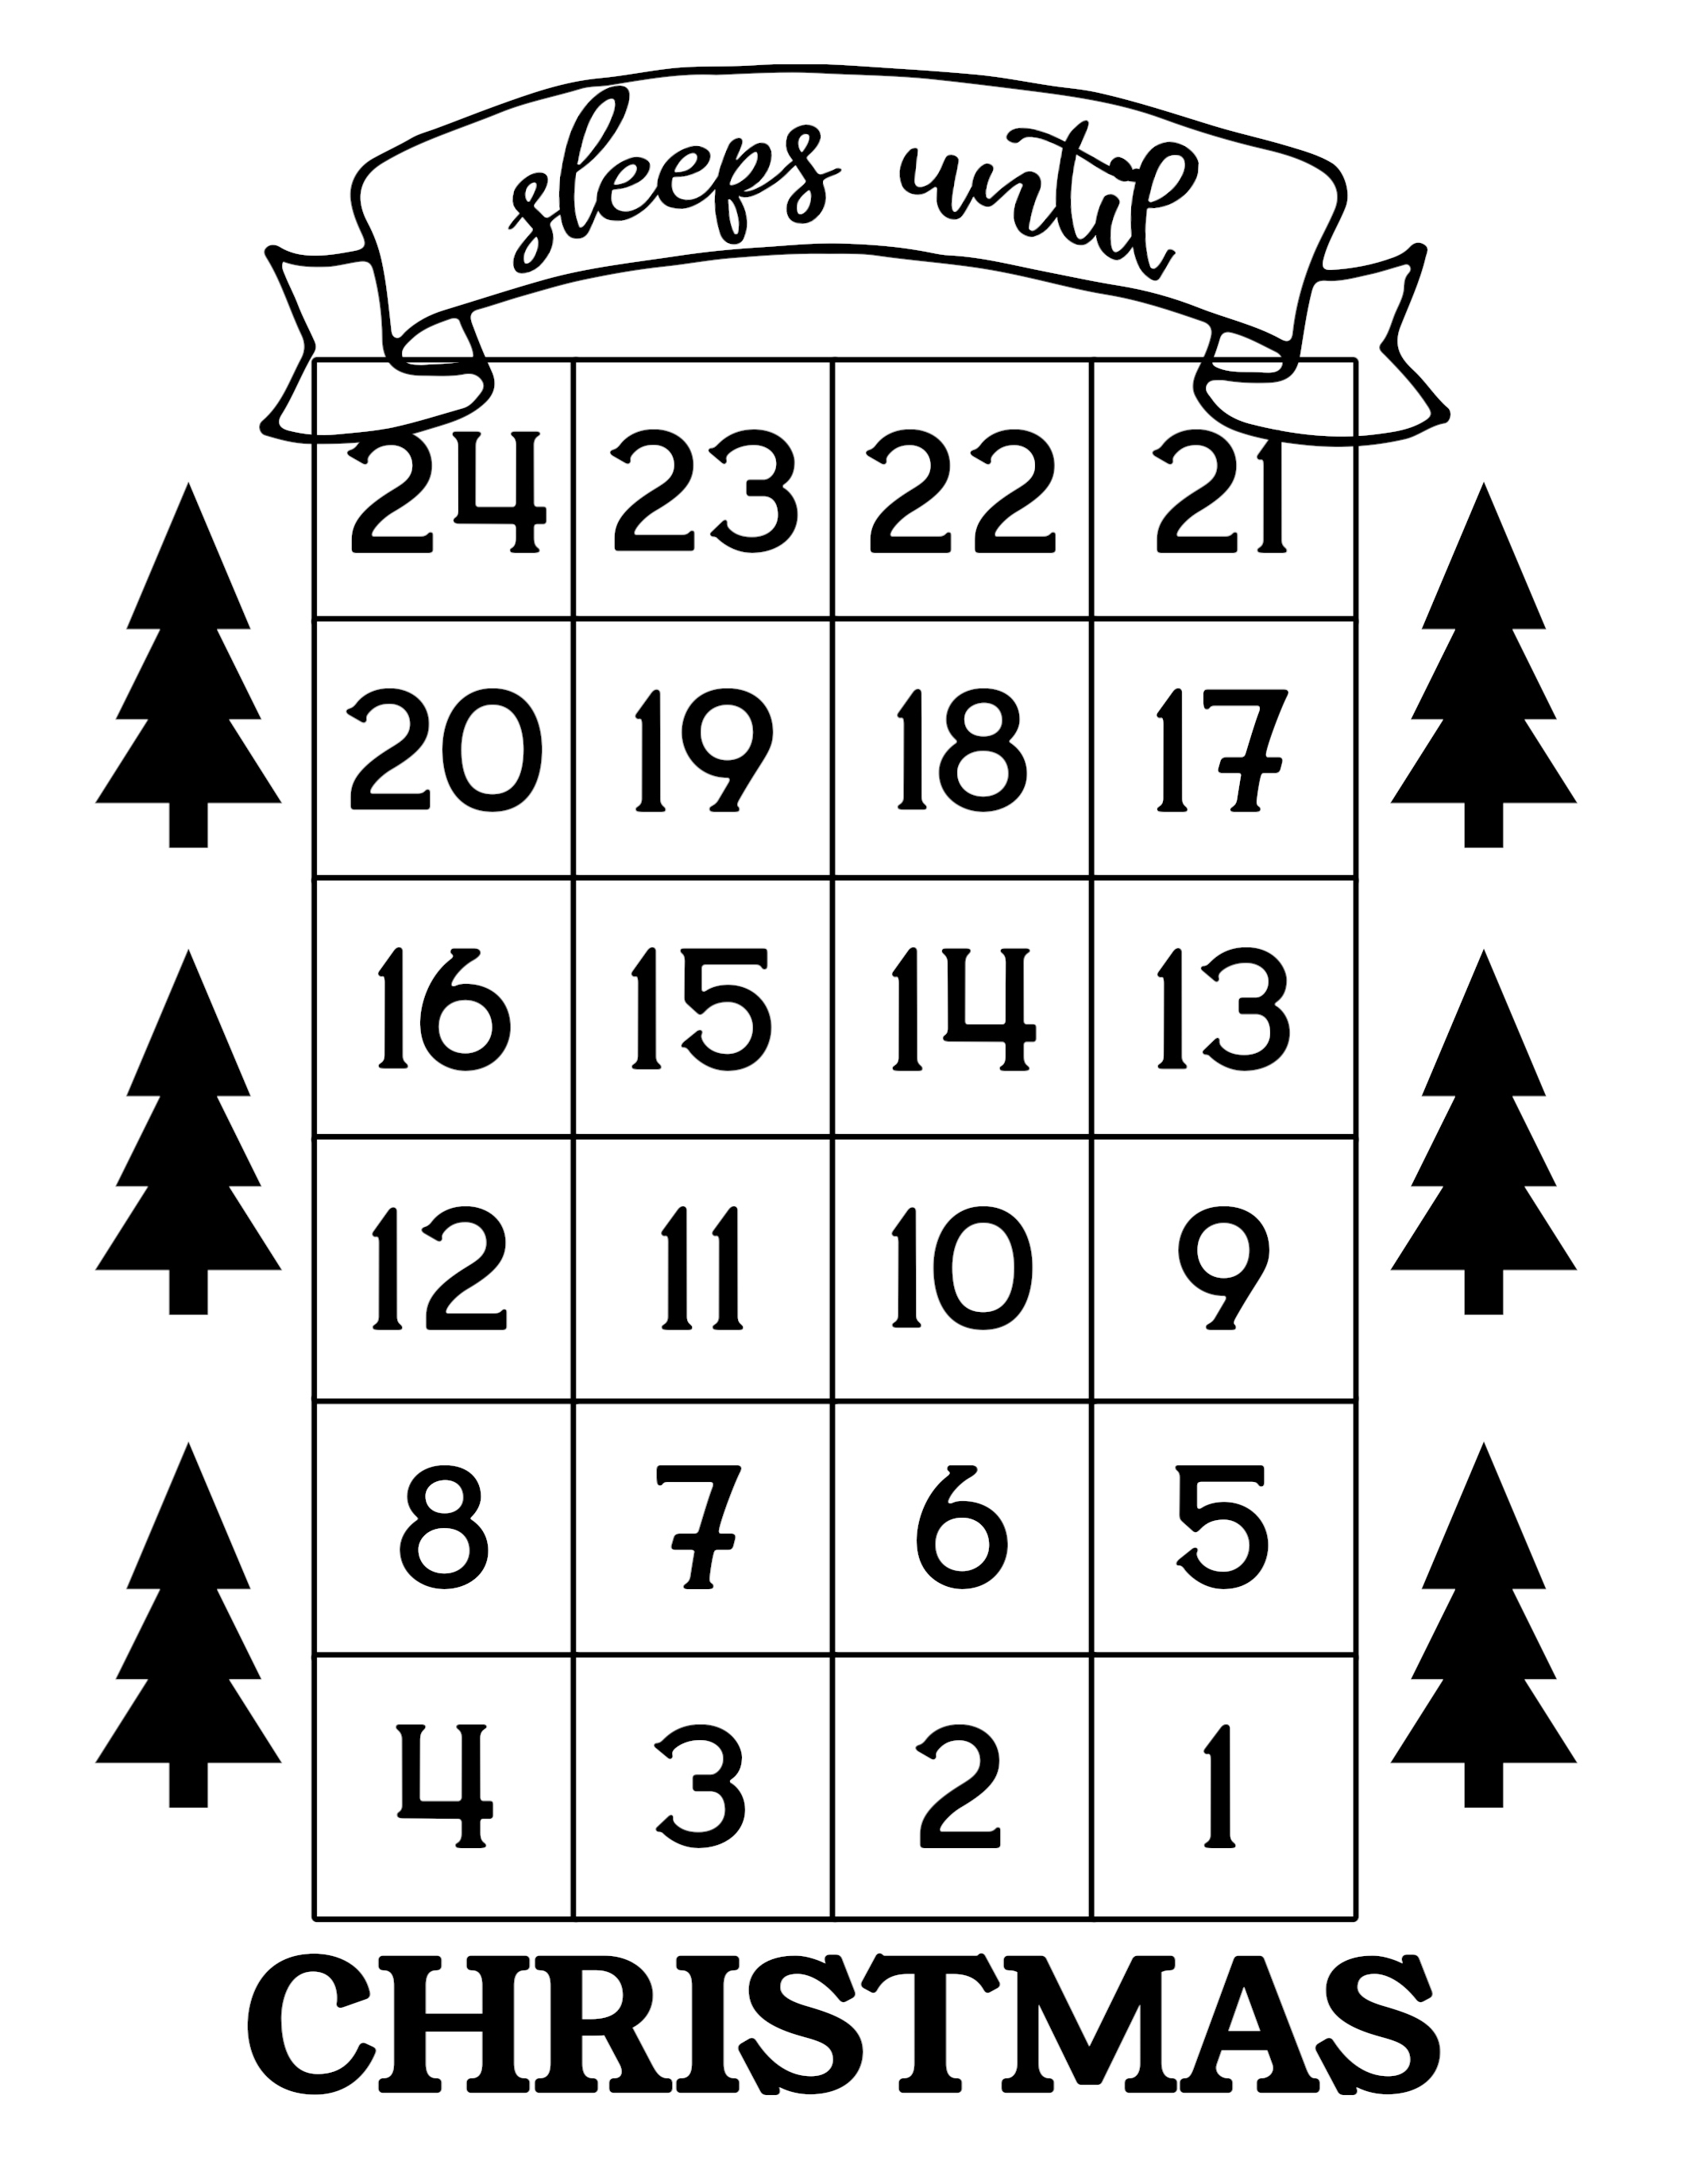 How Many Days Until Christmas Free Printable - Paper Trail Printable Christmas Countdown Calendar 2020